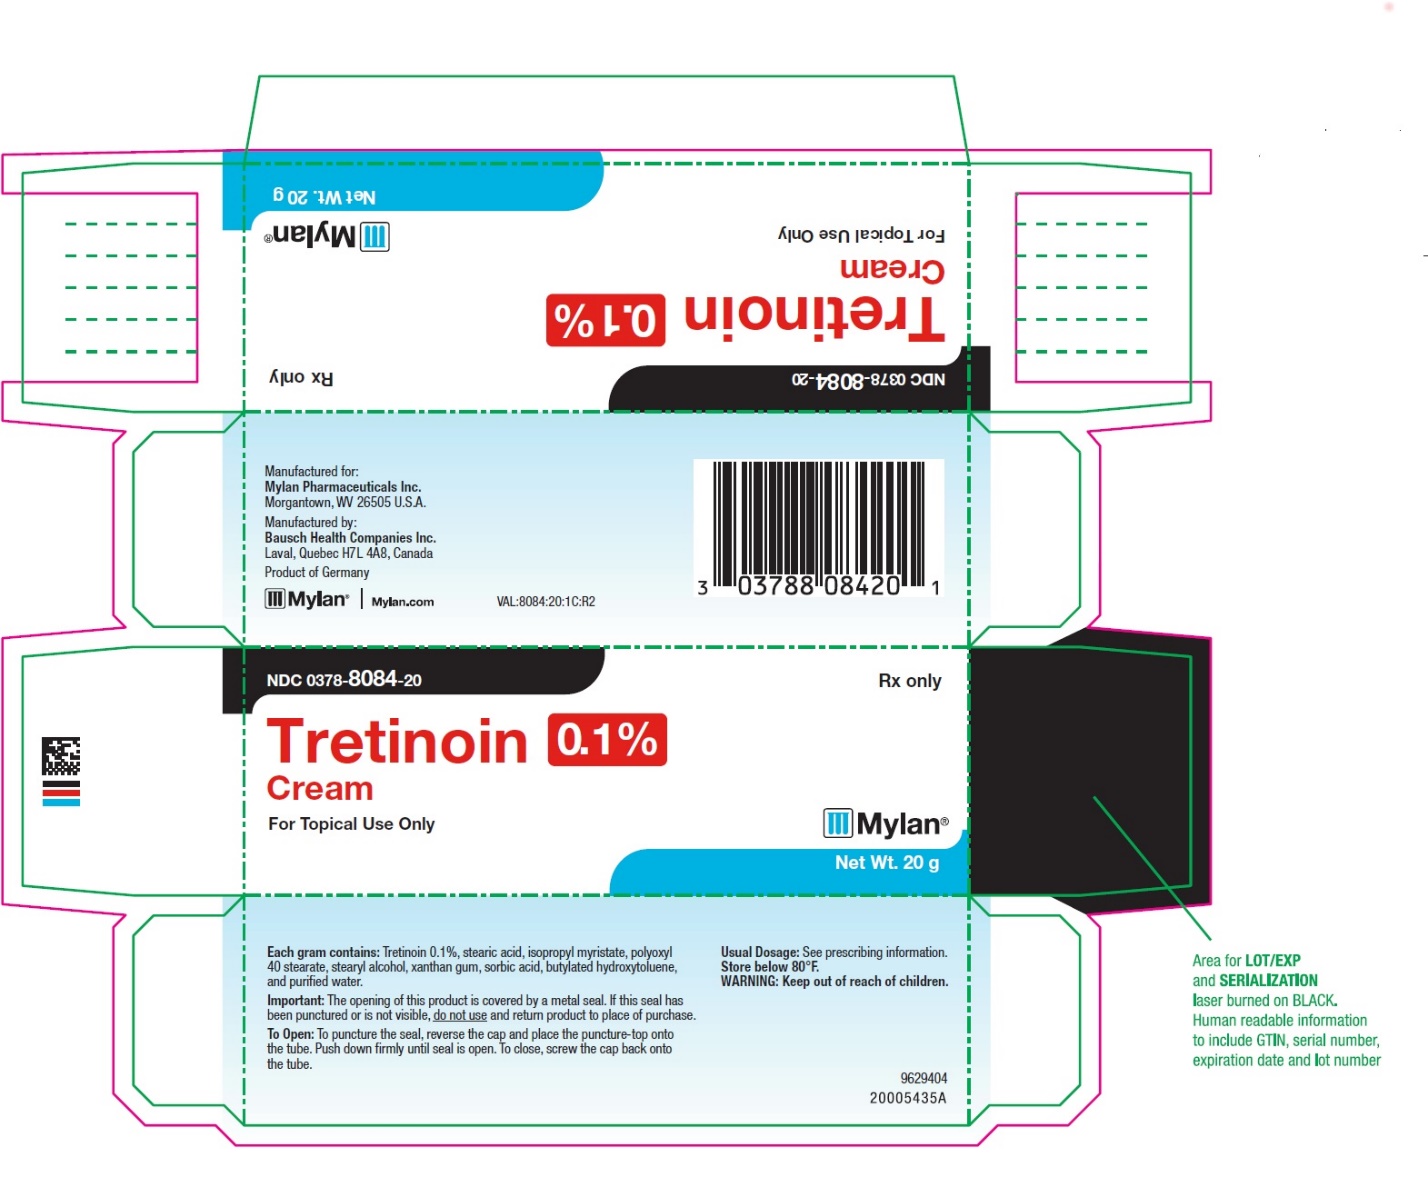 Tretinoin Gel 0.01% Carton Label